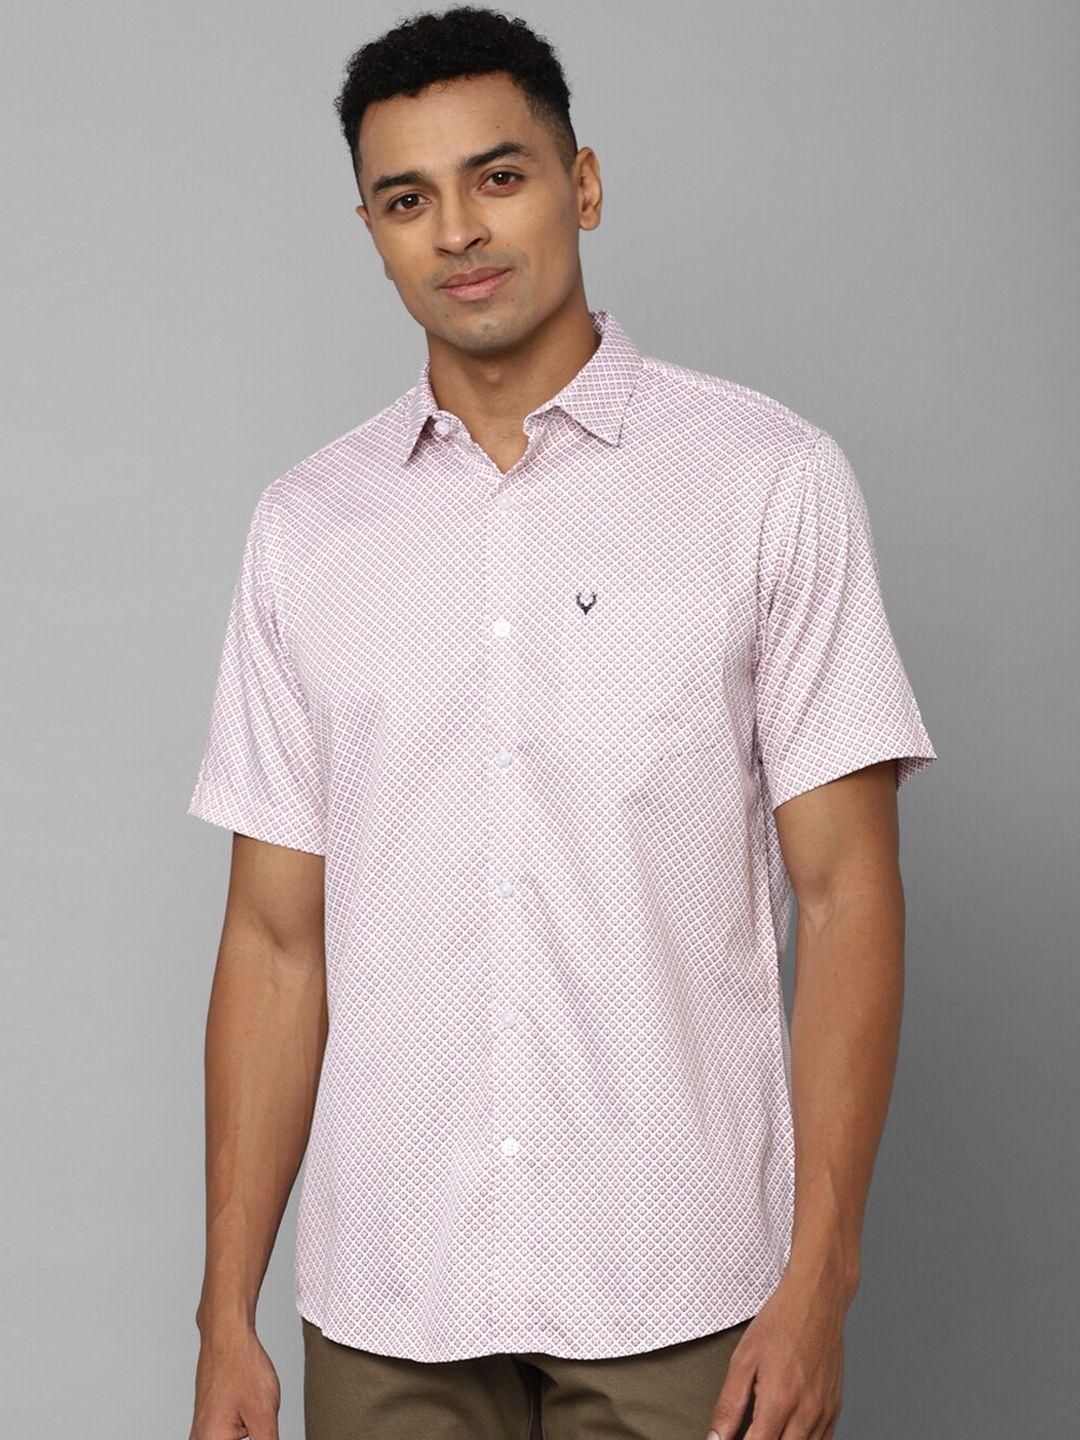 allen-solly-slim-fit-micro-ditsy-printed-spread-collar-pure-cotton-casual-shirt